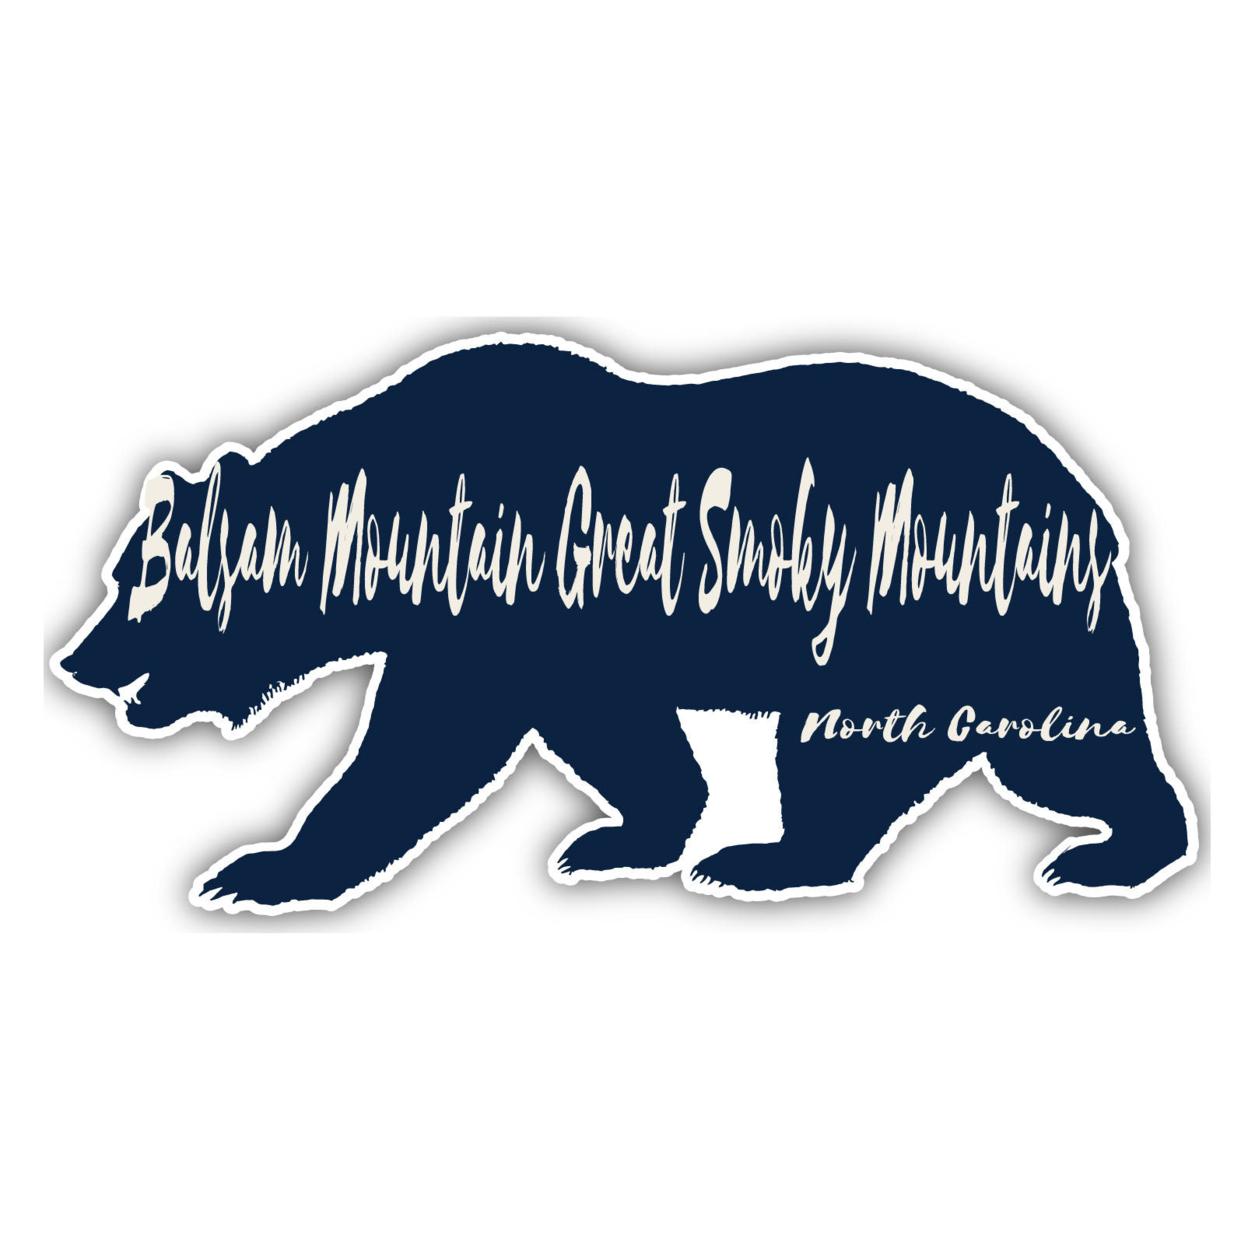 Balsam Mountain Great Smoky Mountains North Carolina Souvenir Decorative Stickers (Choose Theme And Size) - Single Unit, 8-Inch, Bear